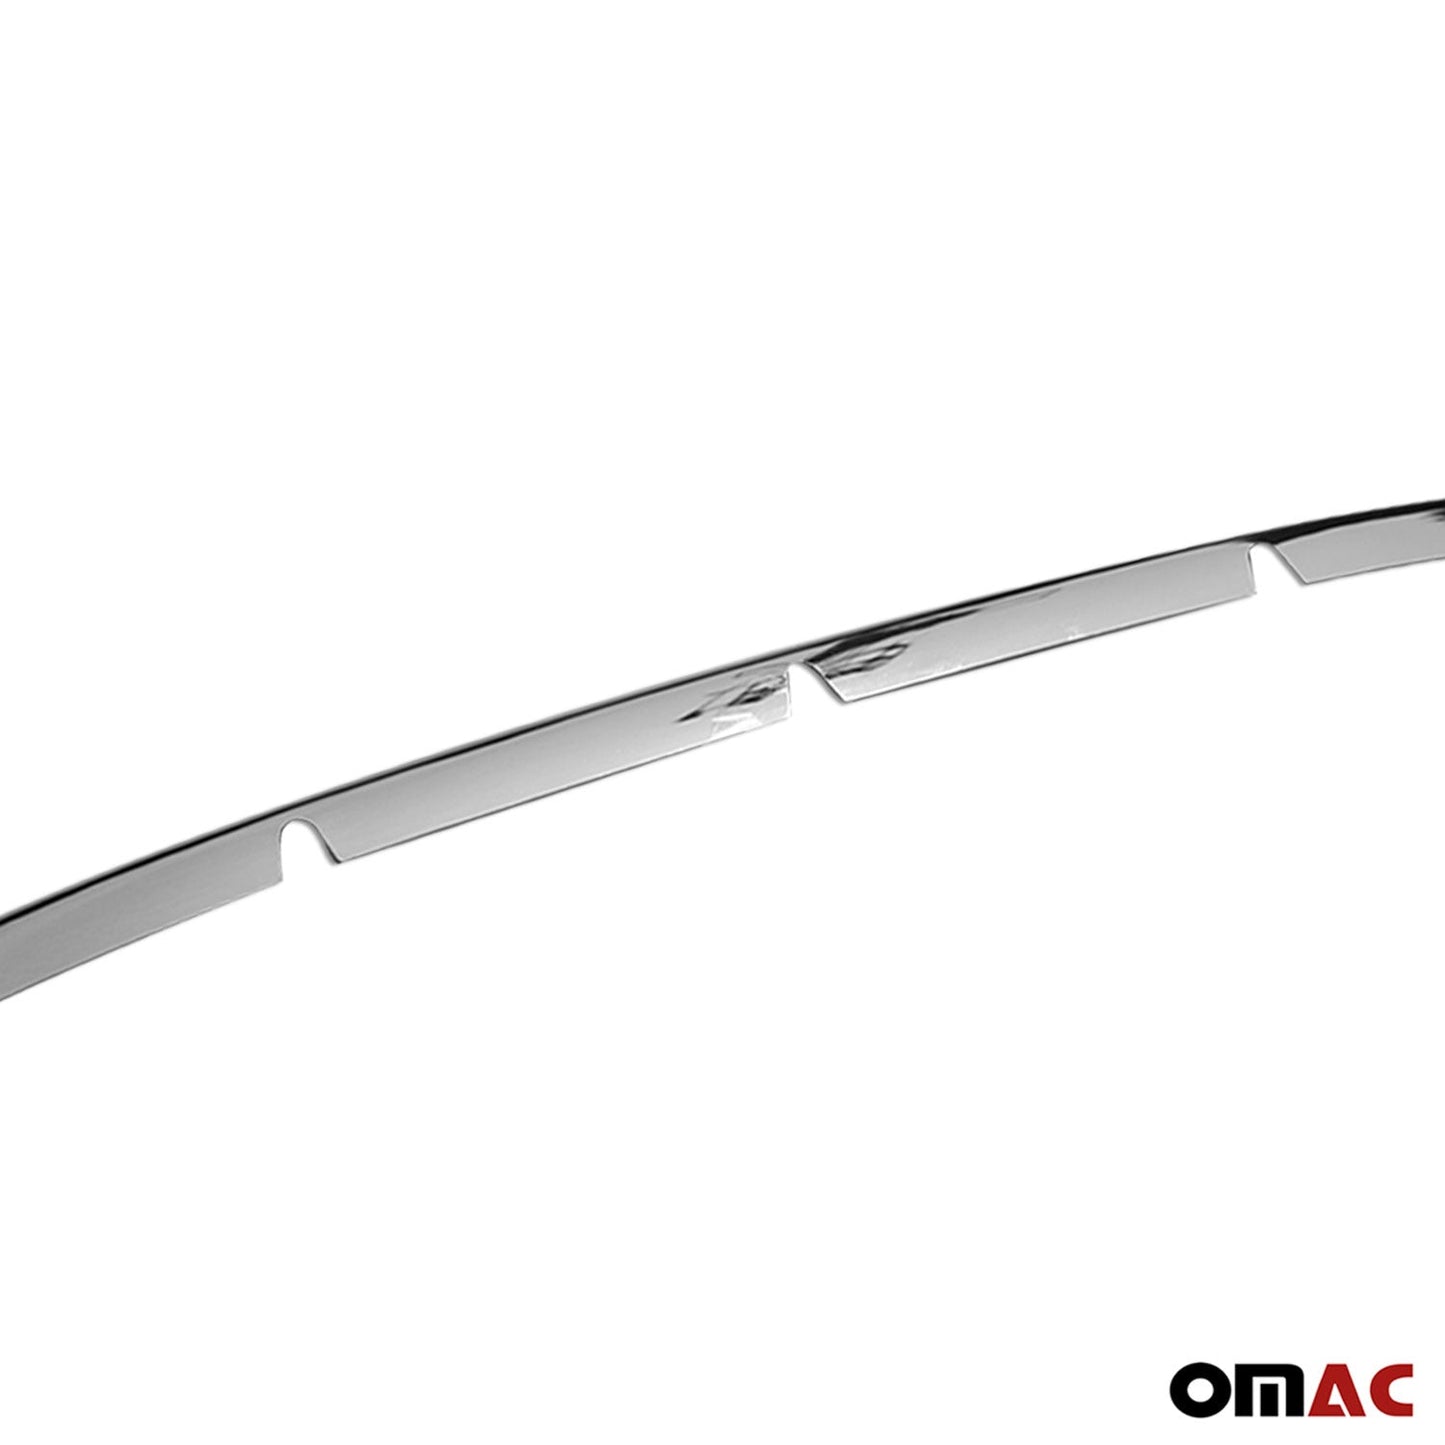 OMAC Front Bumper Grill Trim Molding for Chery Kimo Steel Silver 1 Pc 1803082